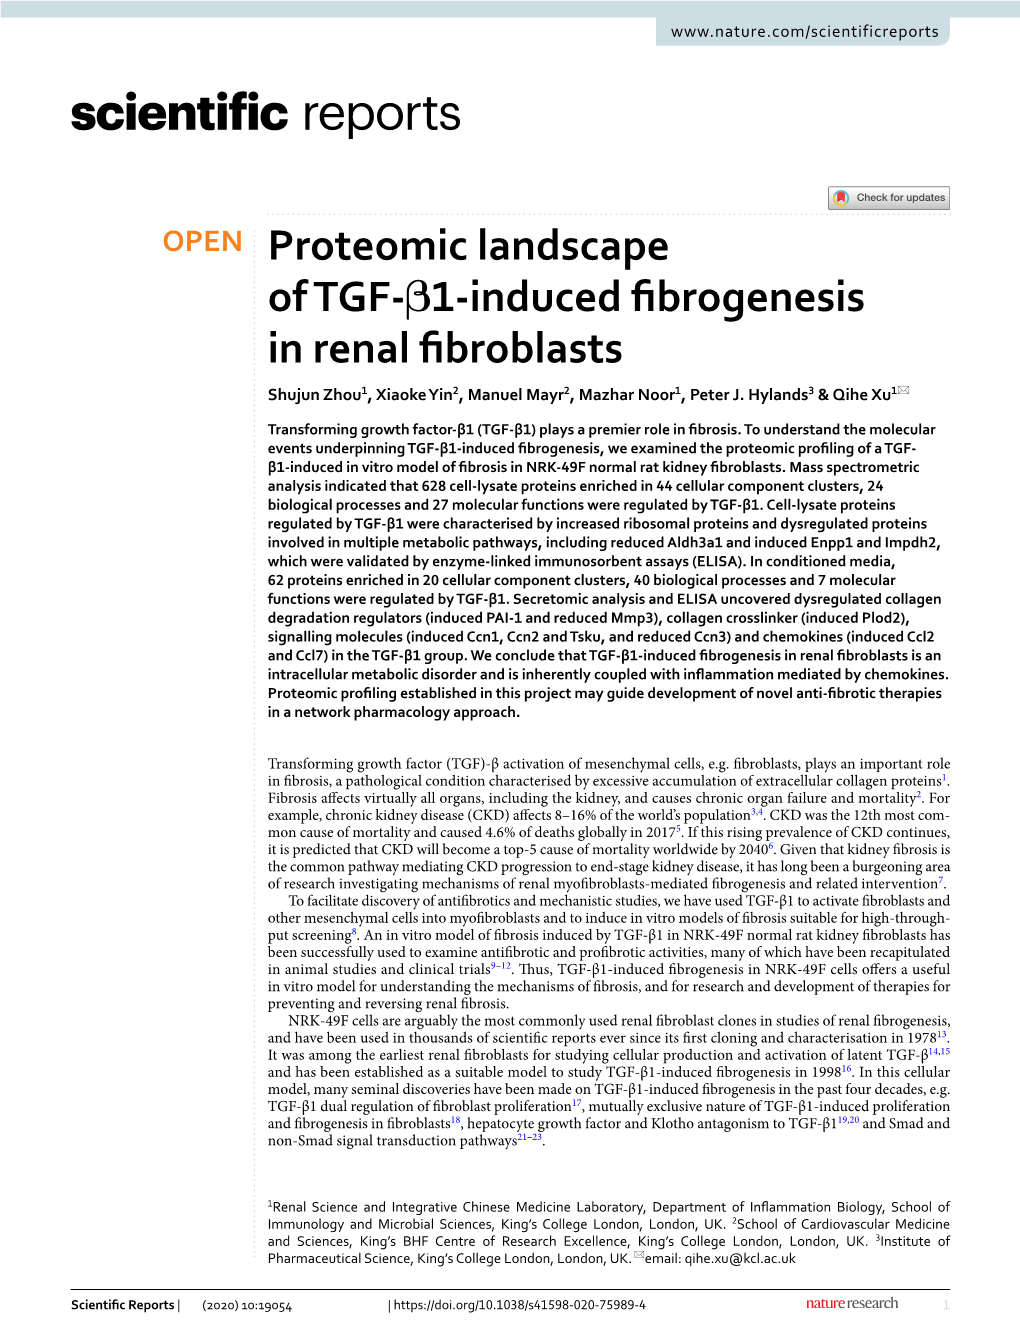 Proteomic Landscape of TGF-Β1-Induced Fibrogenesis in Renal